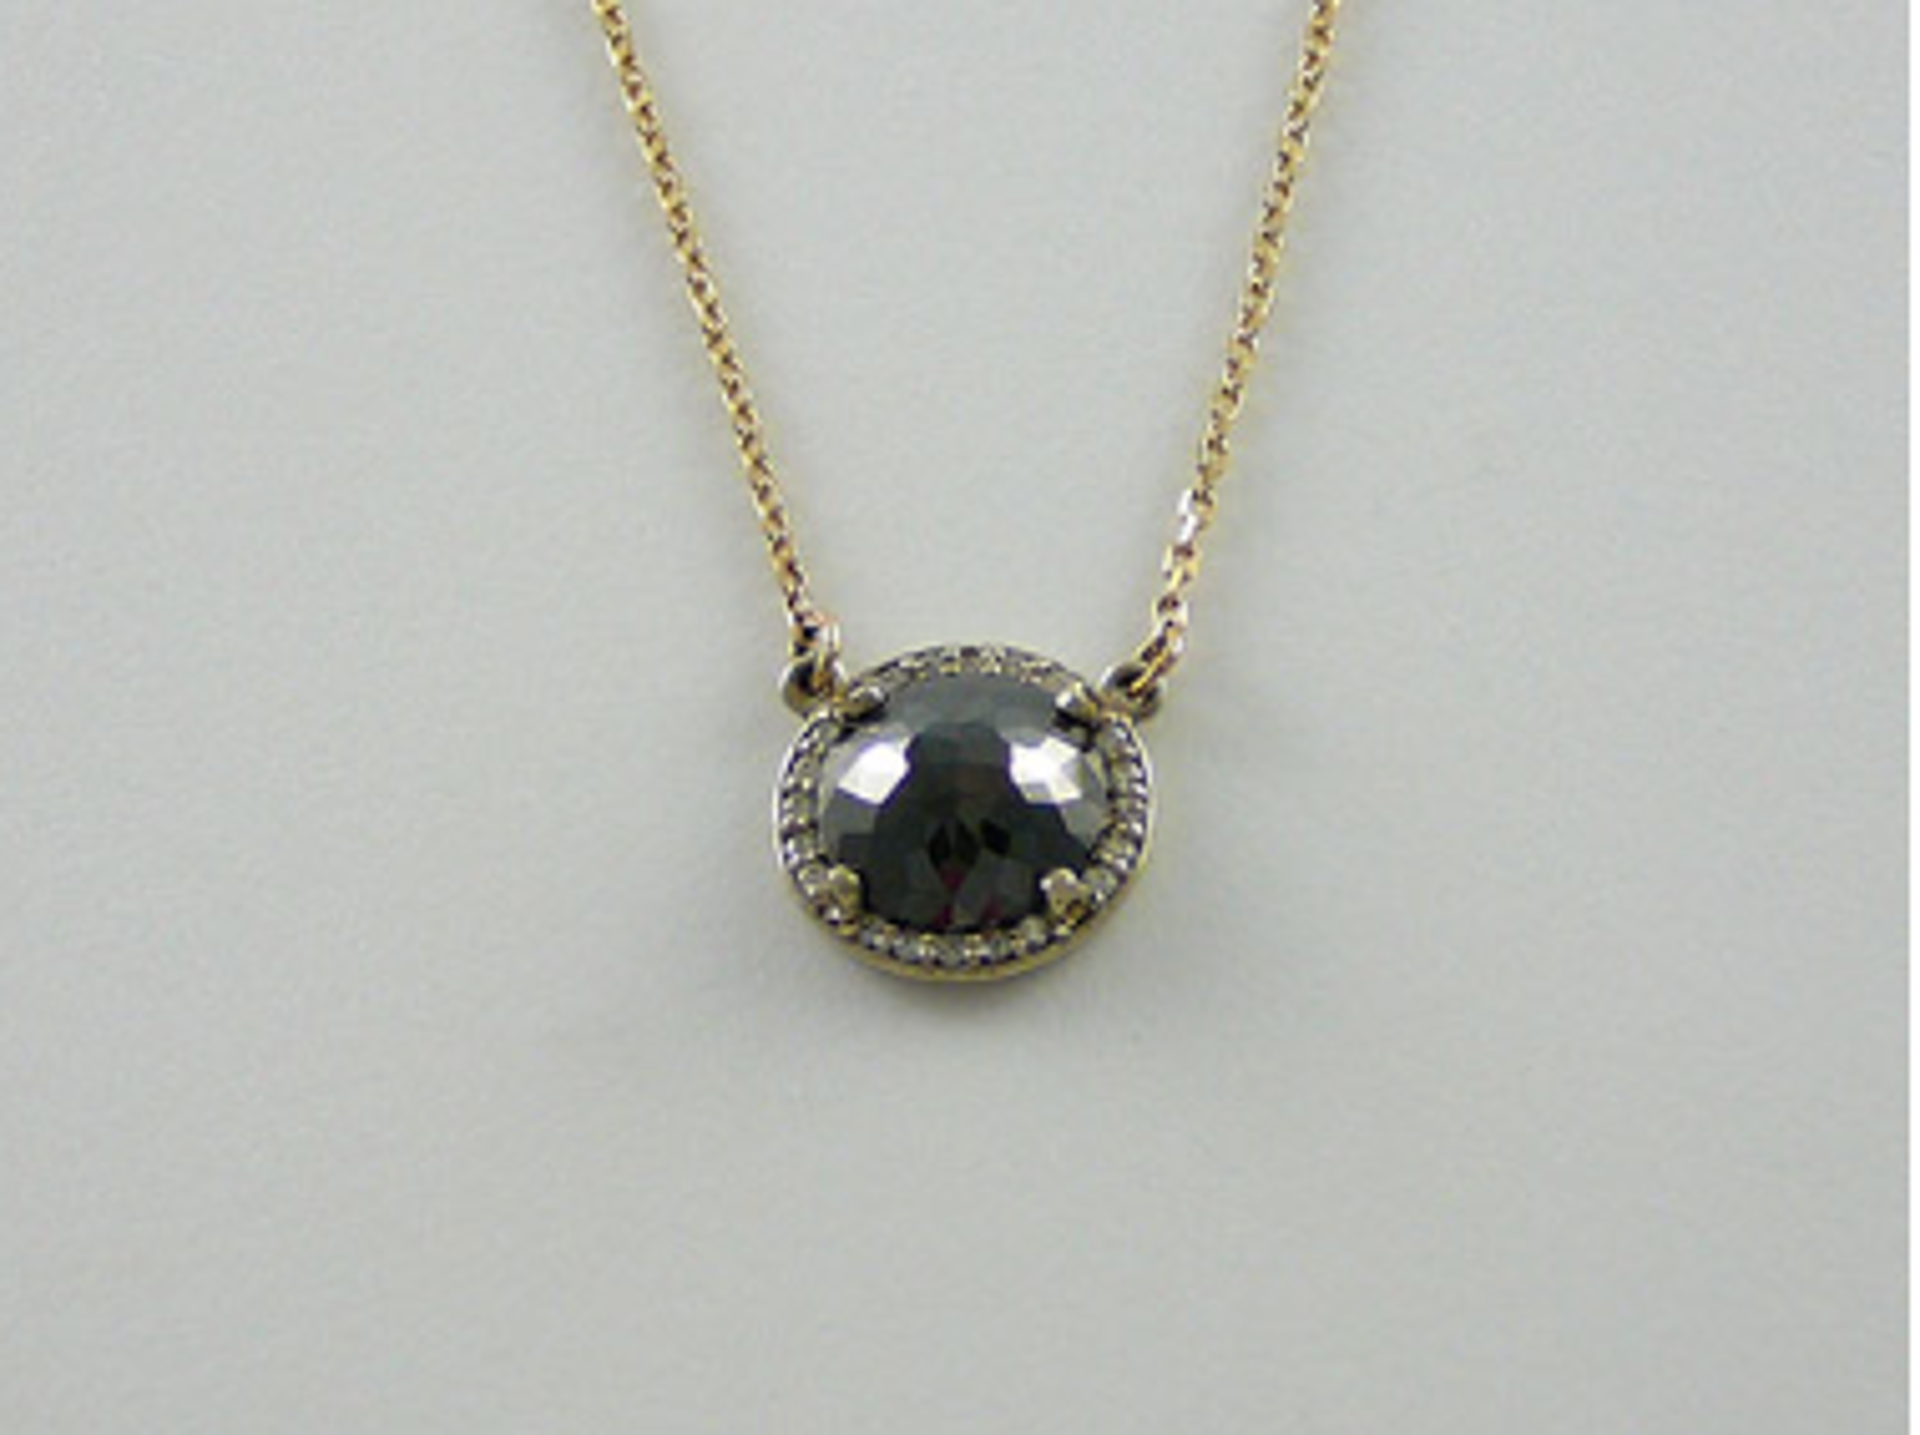 Black Diamond Pendant with Chain by D'ETTE DELFORGE